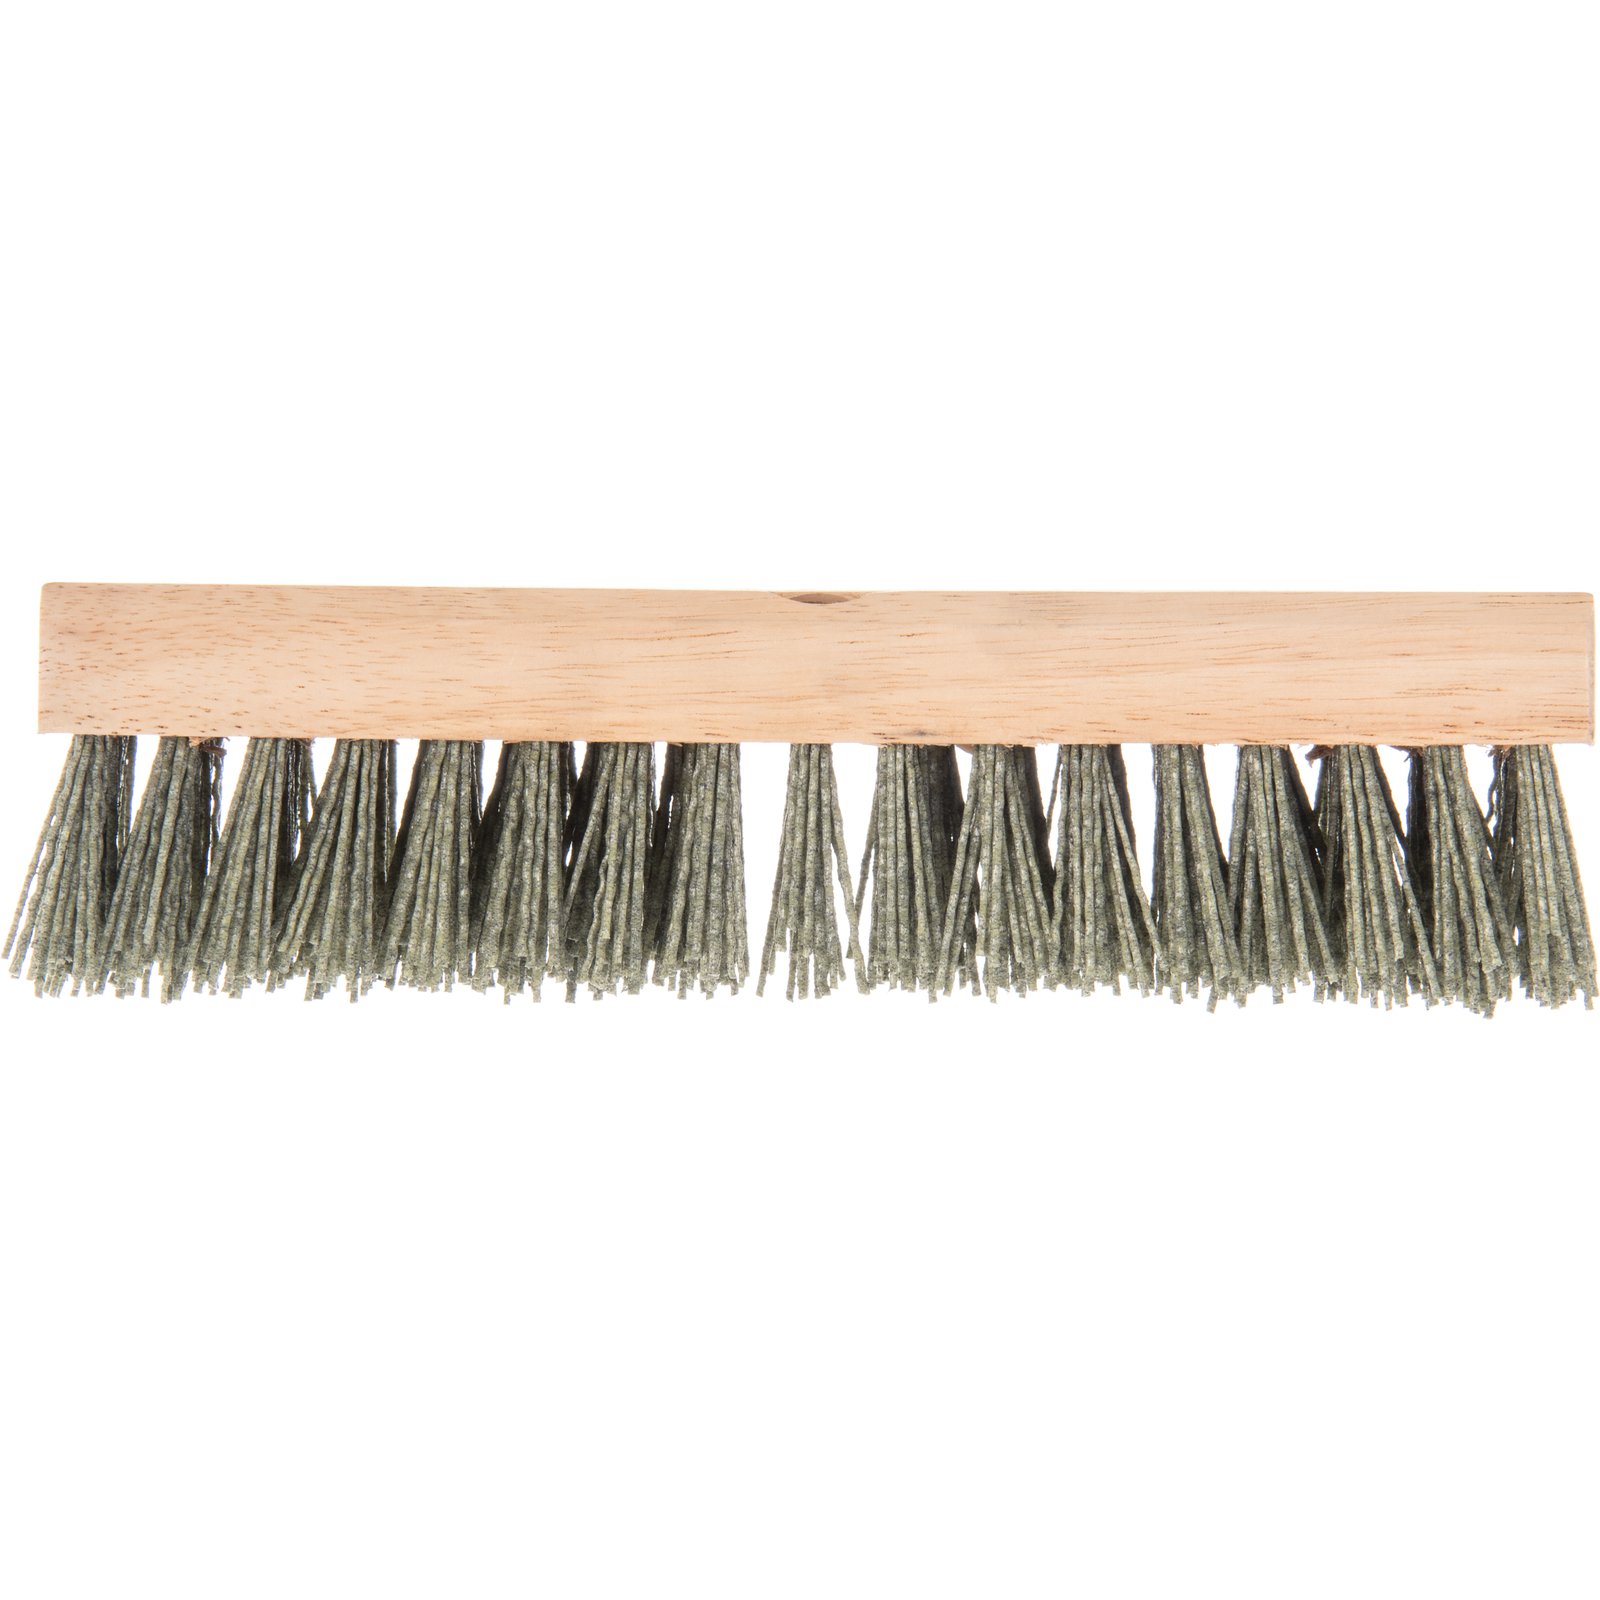 Carlisle 3619200 10 Wooden Floor / Deck Scrub Brush